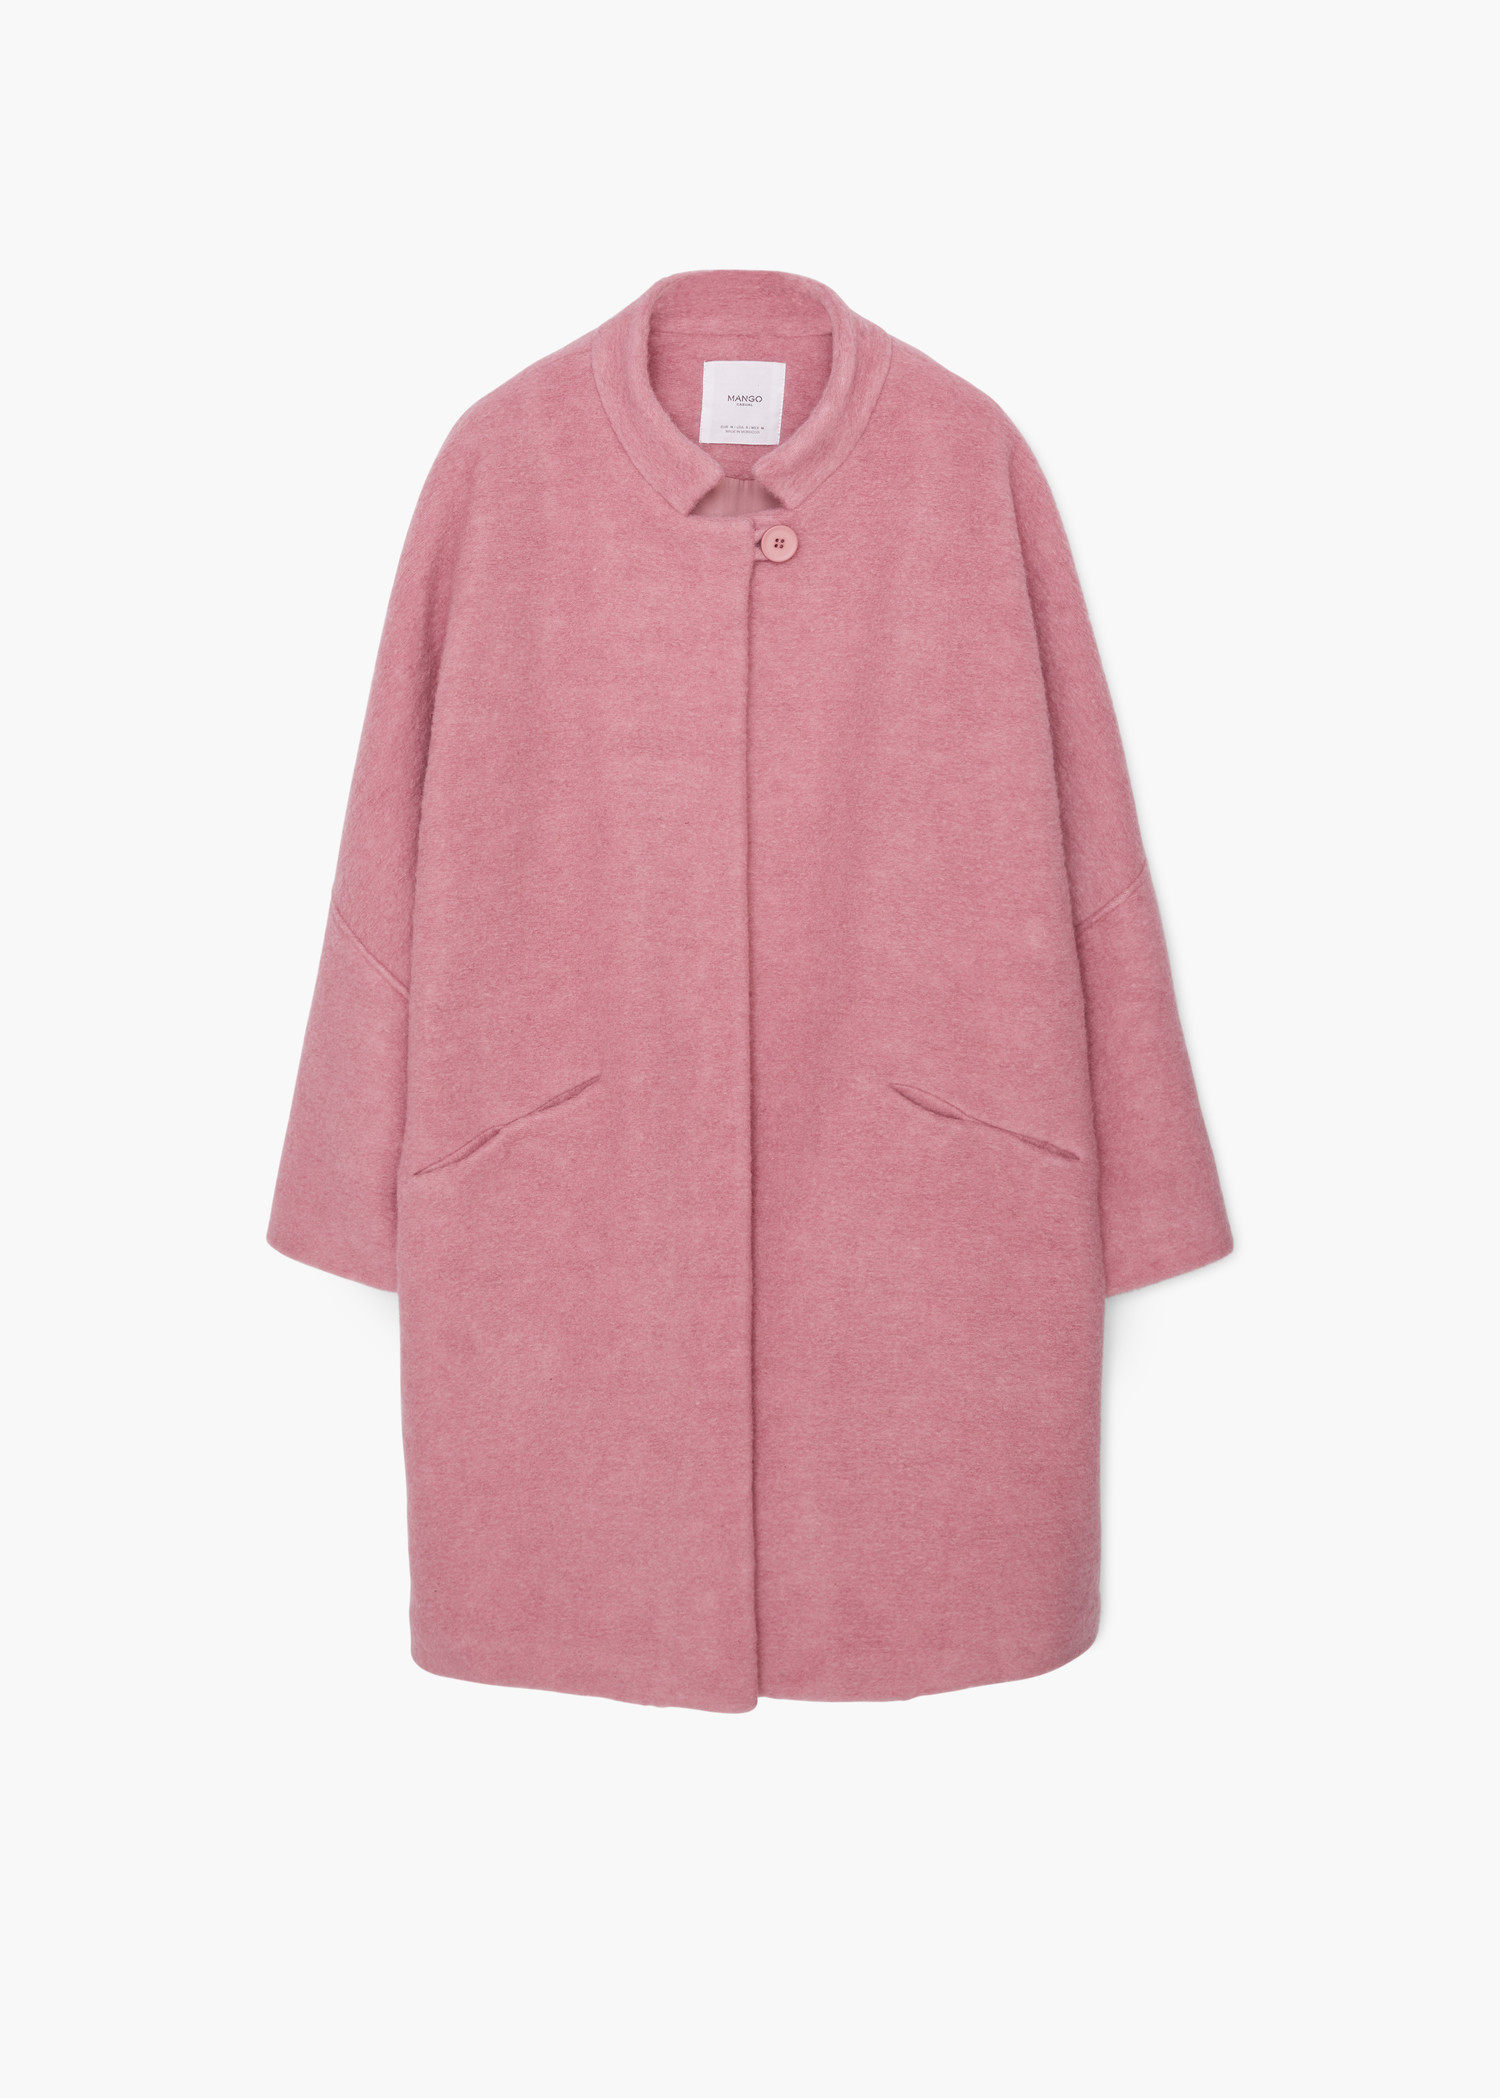 Mango Oversize Wool Coat in Pastel Pink (Pink) - Lyst